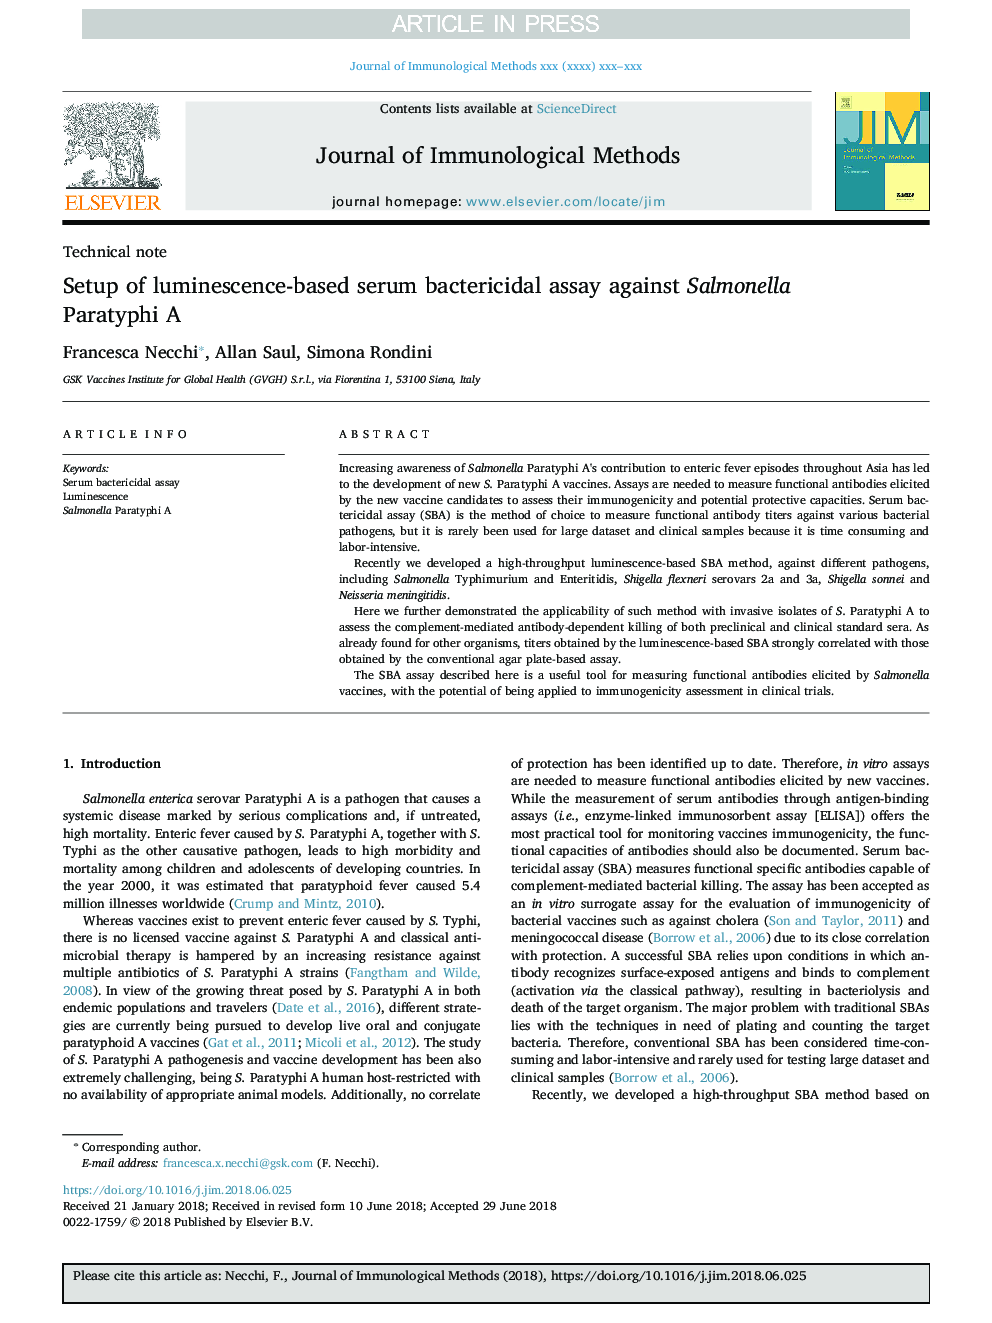 Setup of luminescence-based serum bactericidal assay against Salmonella Paratyphi A